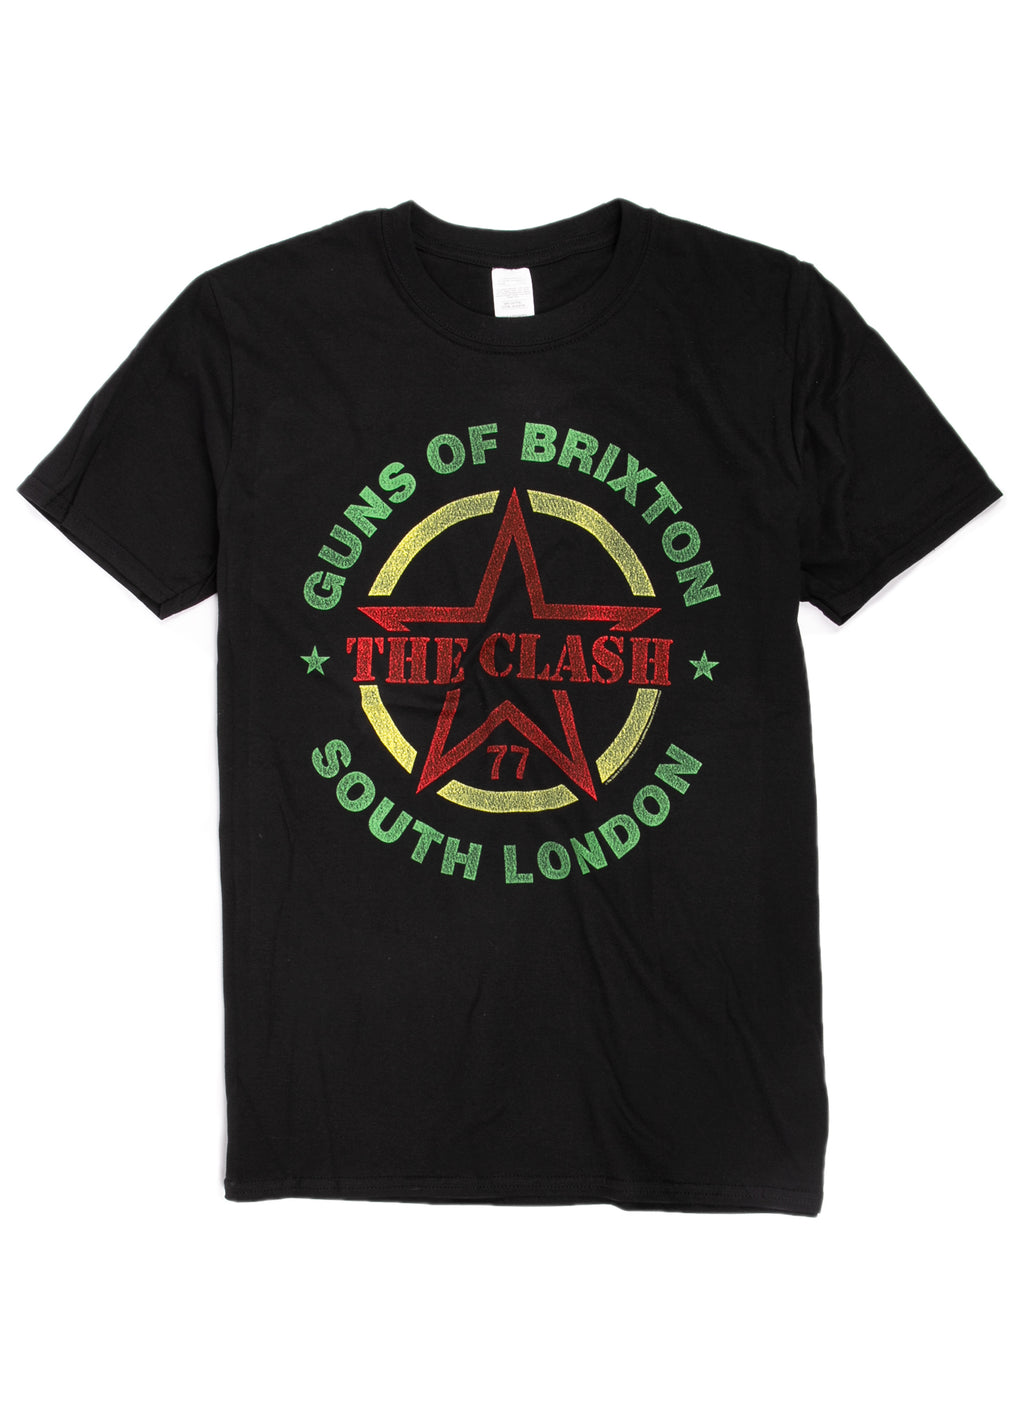 The Clash "Guns Of Brixton" t-shirt.